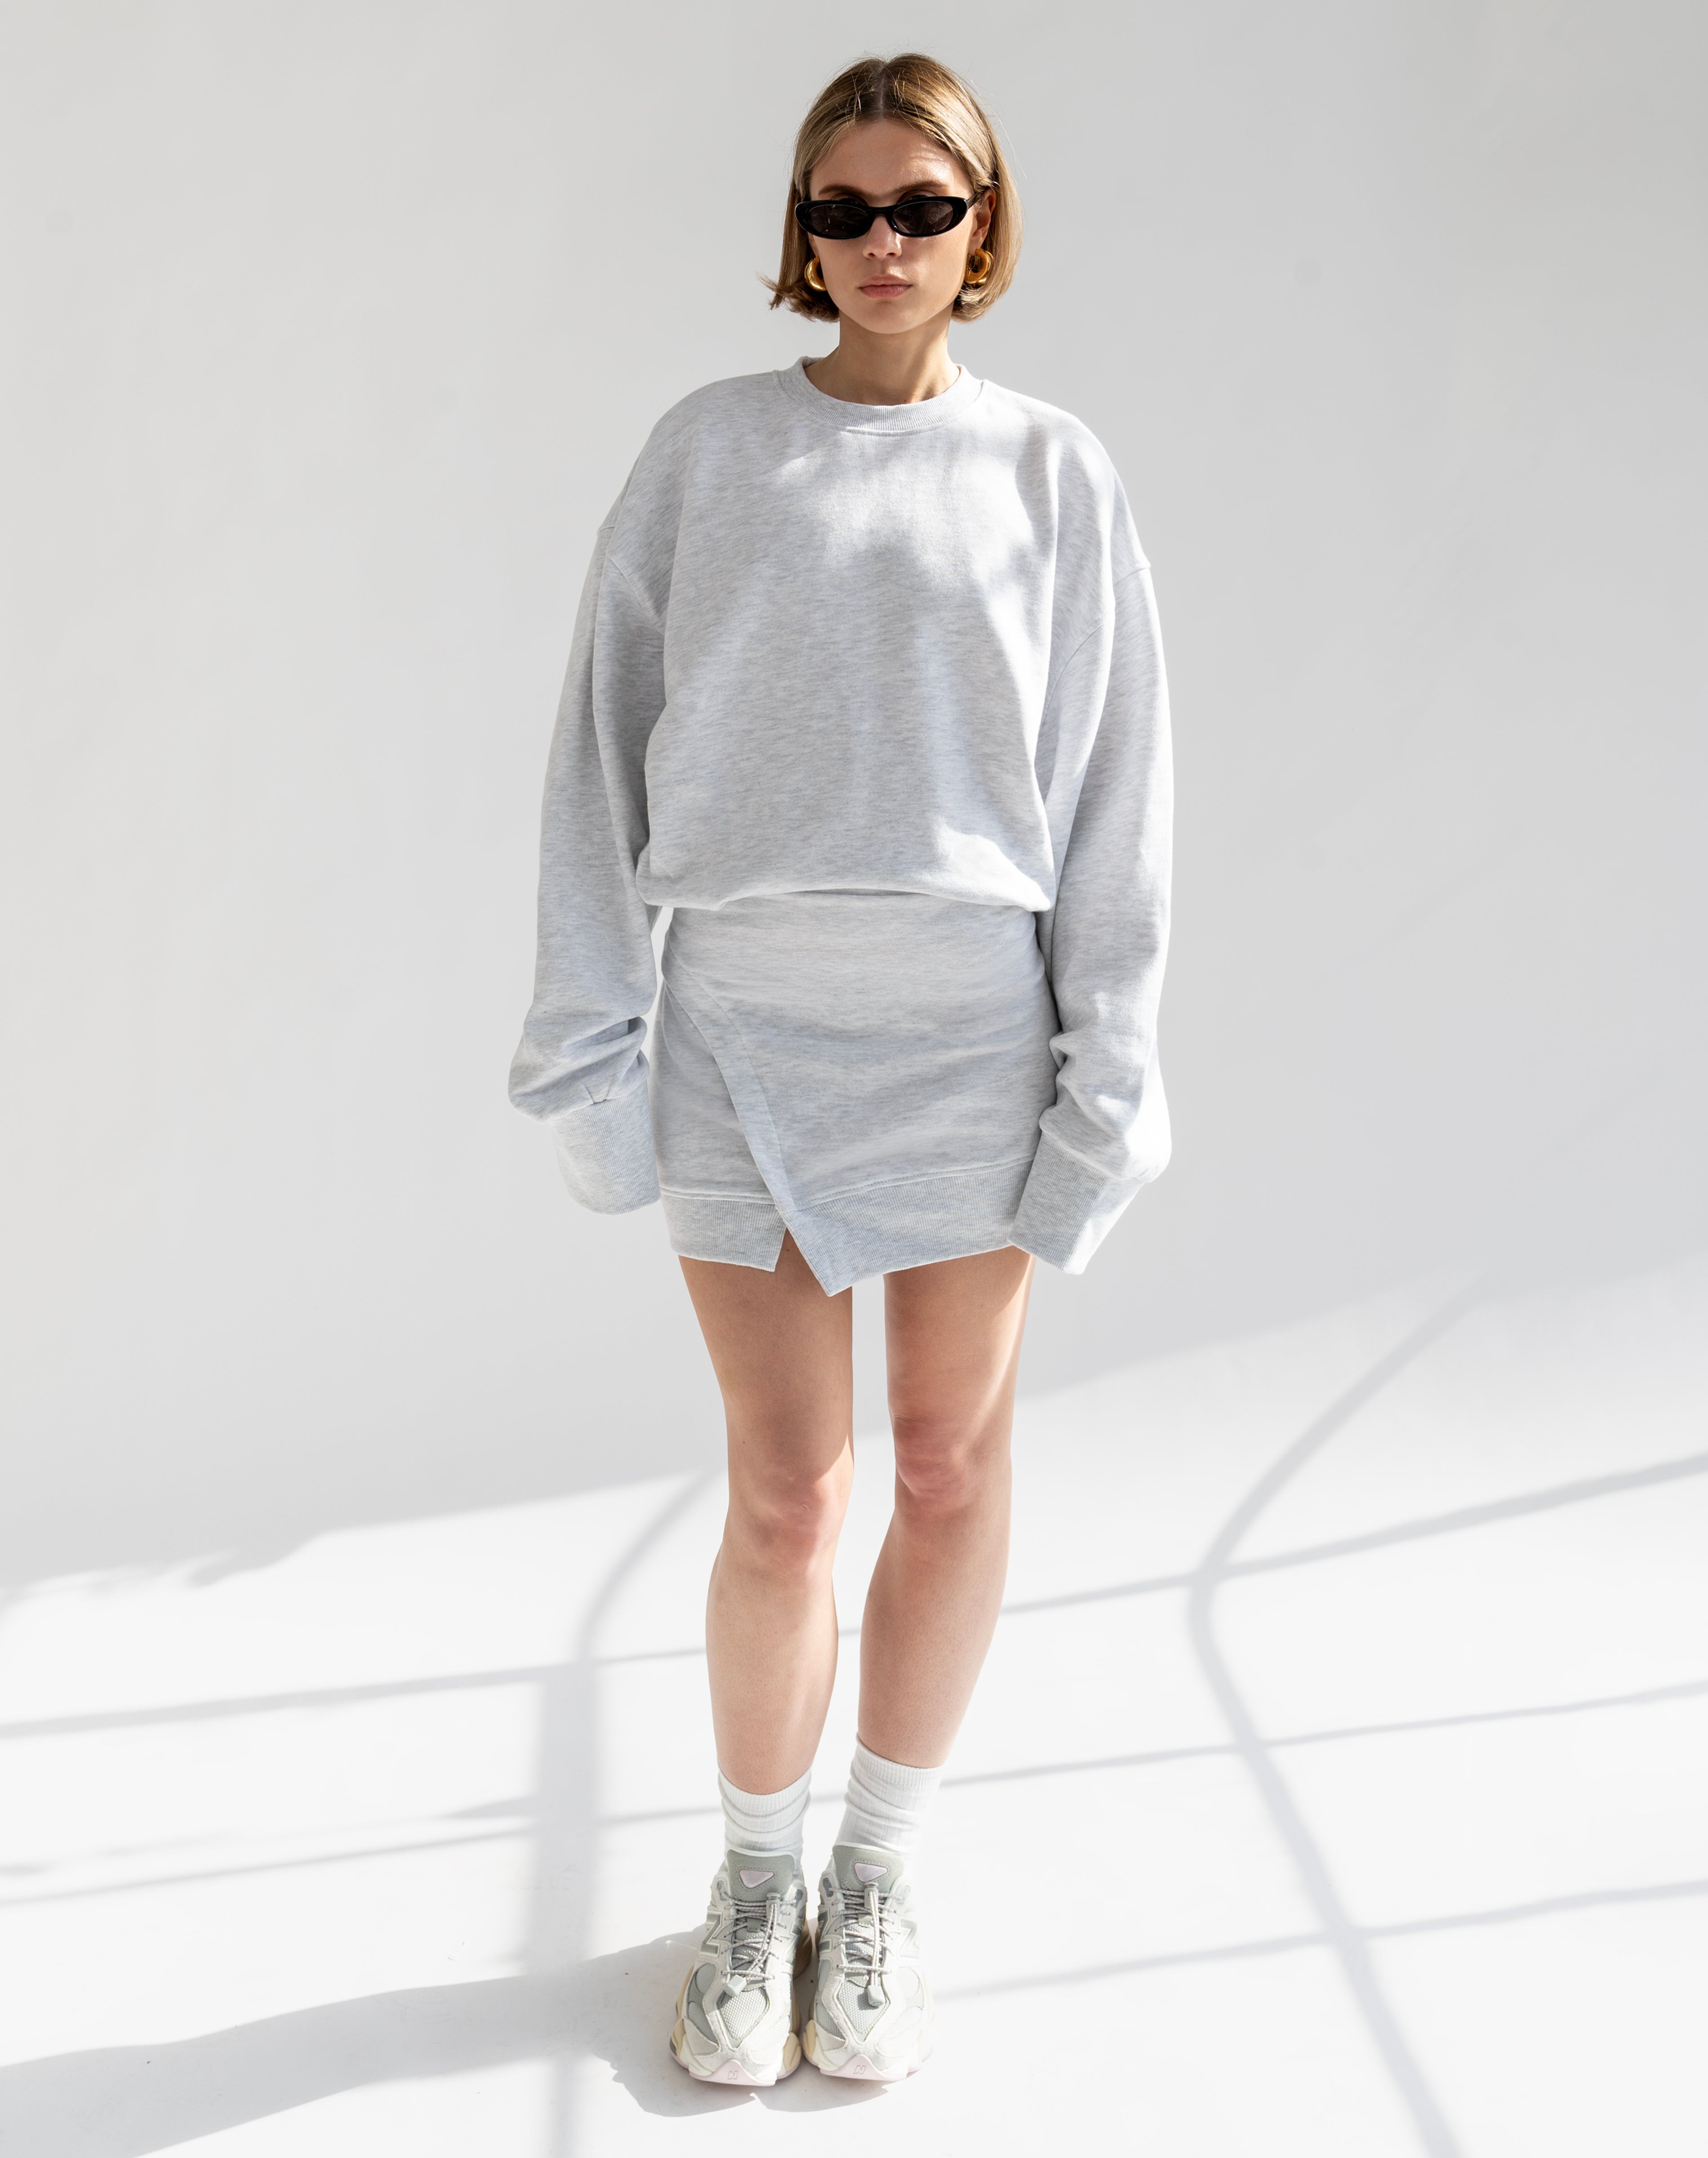 August Sweatshirt Mini Dress, Grey